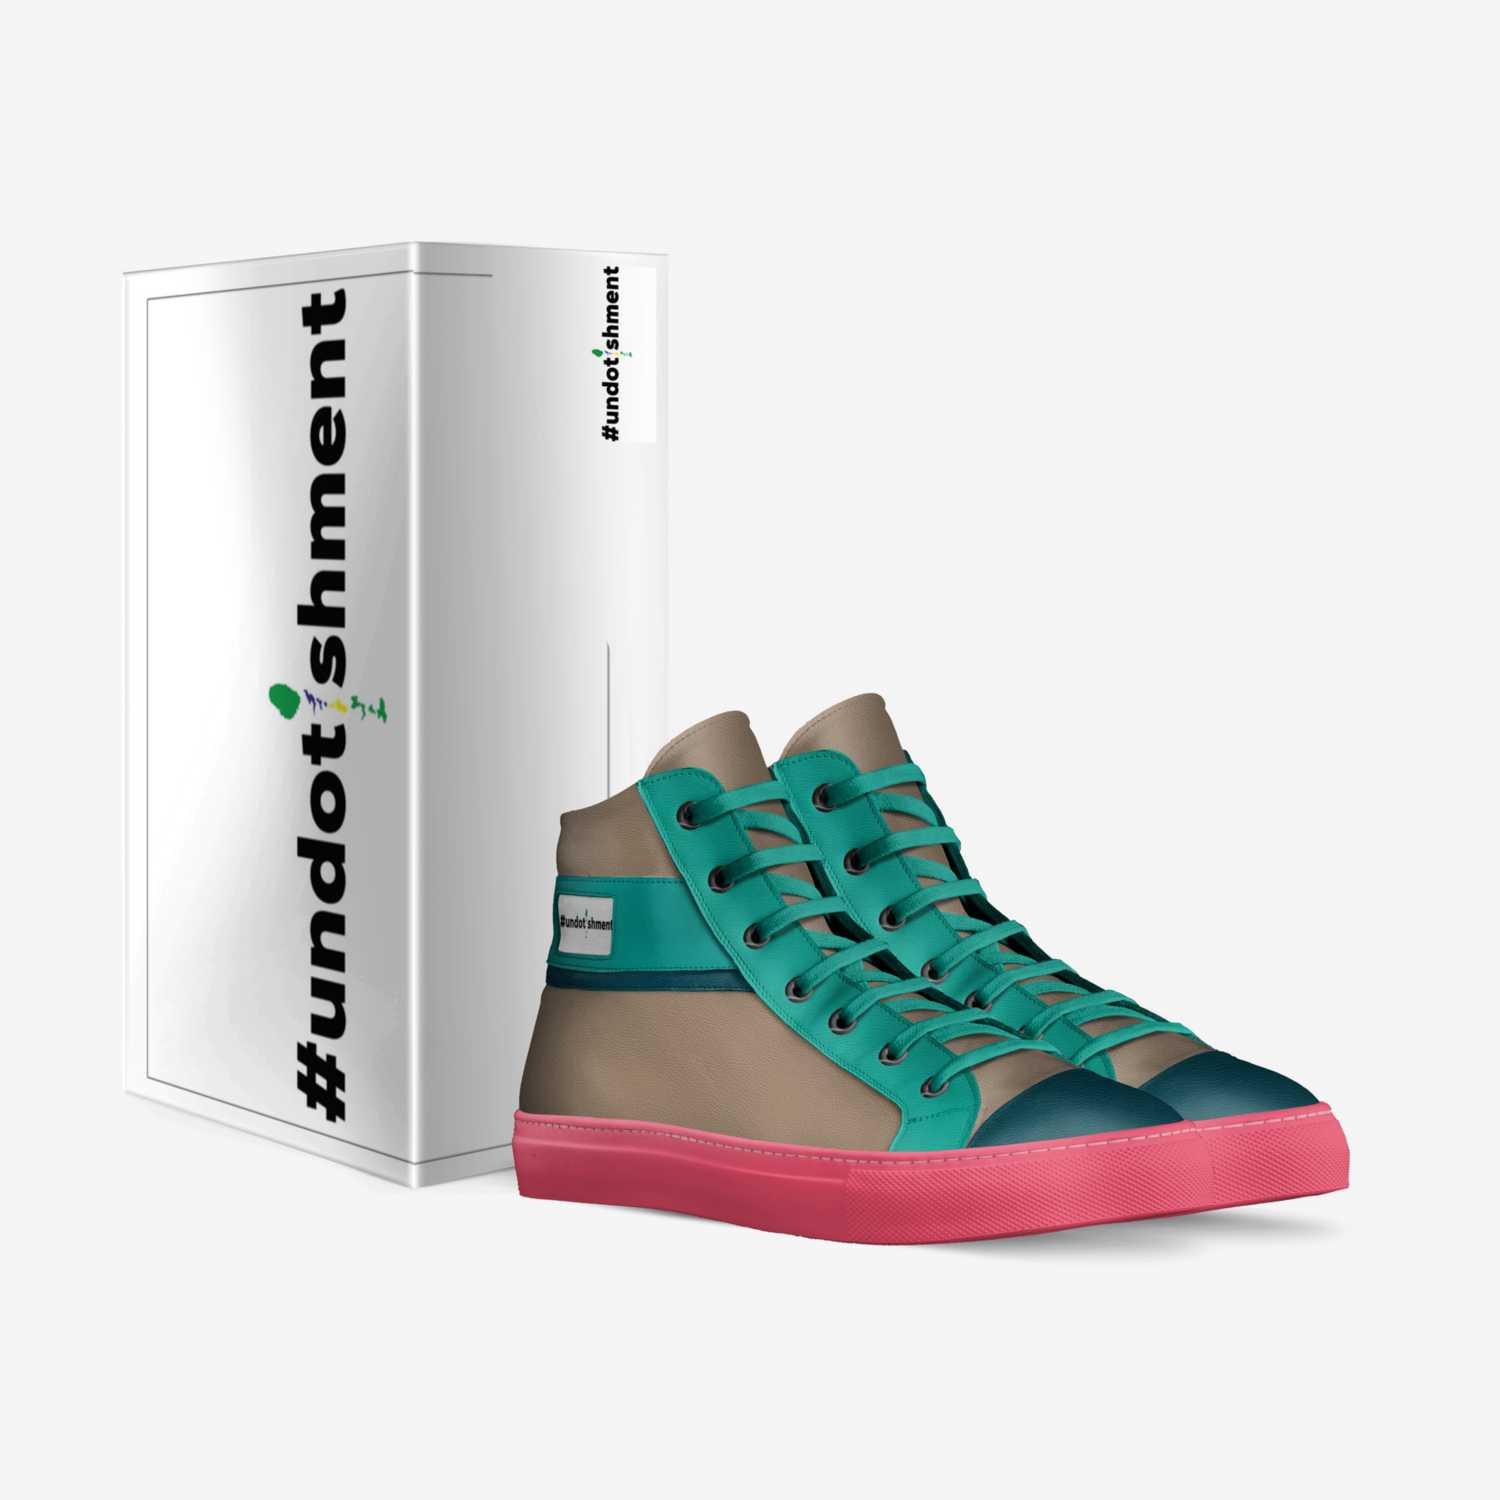 #undotishment LLC custom made in Italy shoes by Kirk Cambridge-del Pesche | Box view